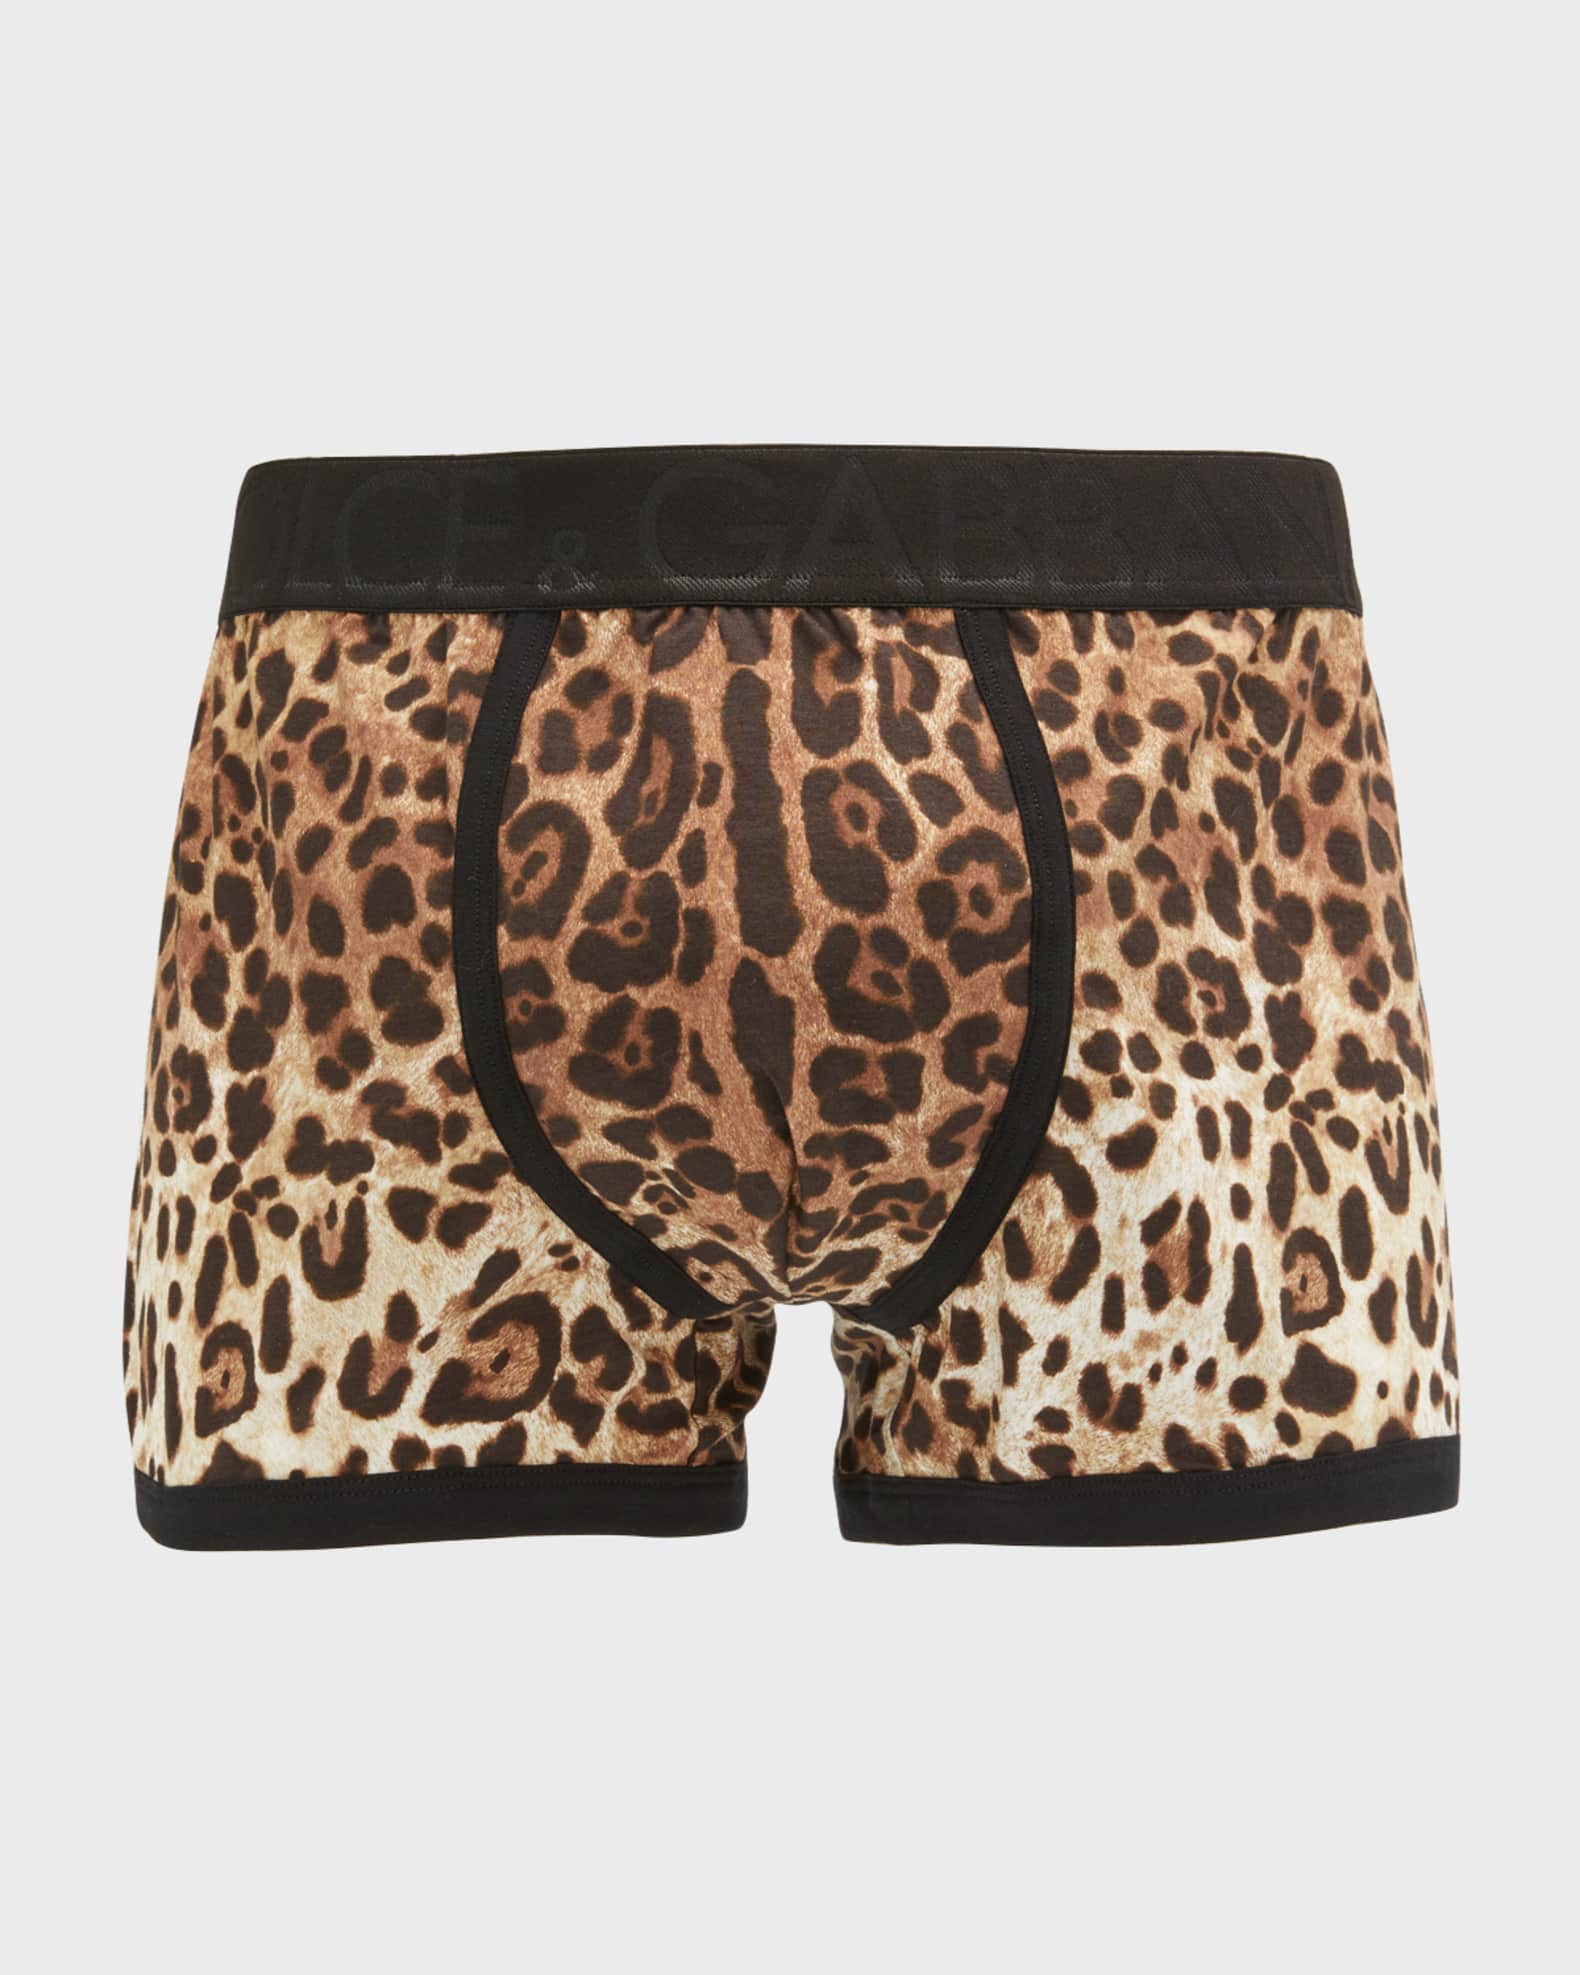 Dolce&Gabbana Men's Leopard-Print Boxer Briefs | Neiman Marcus